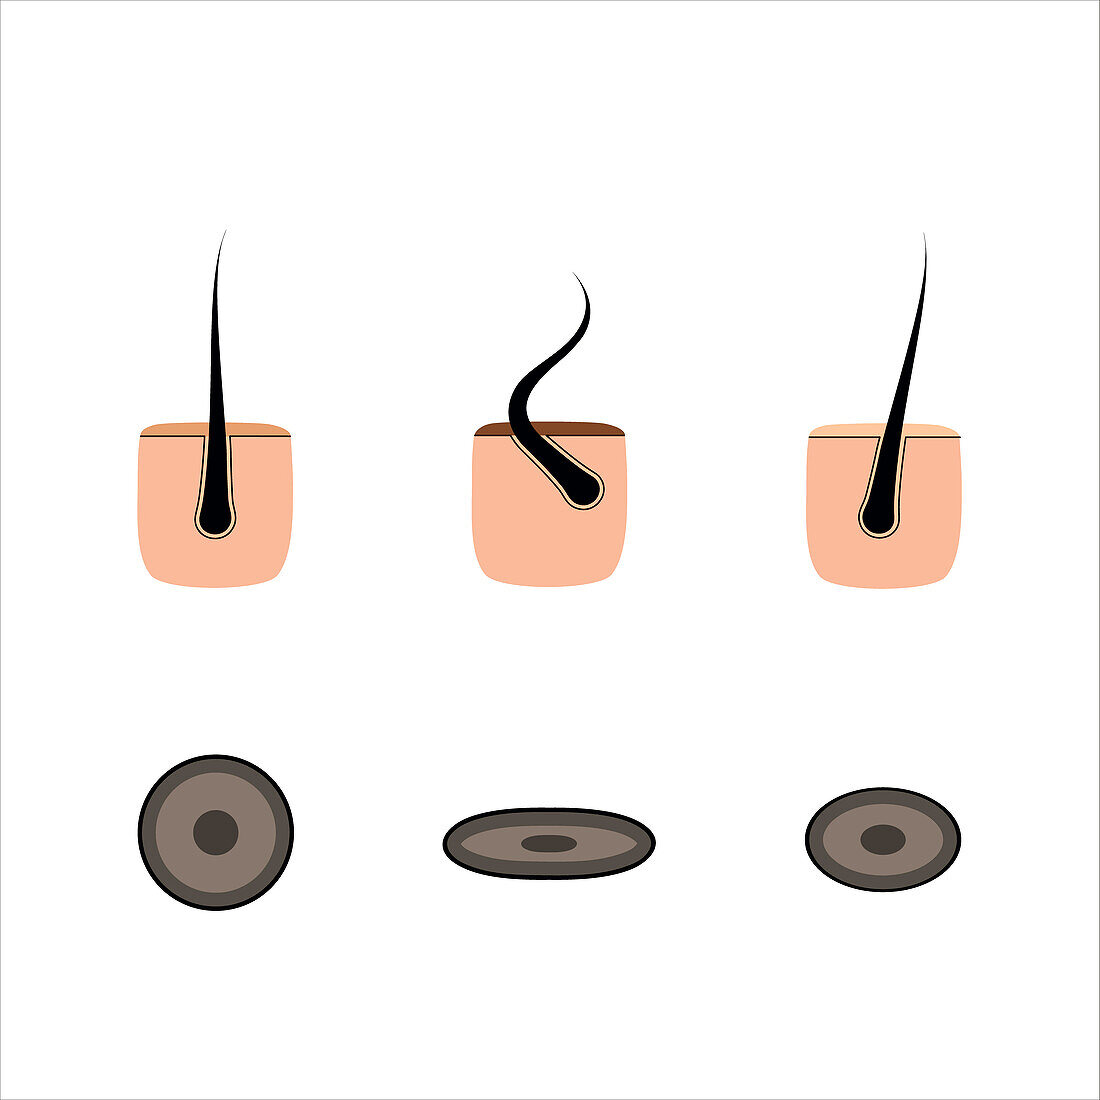 Hair types chart, illustration